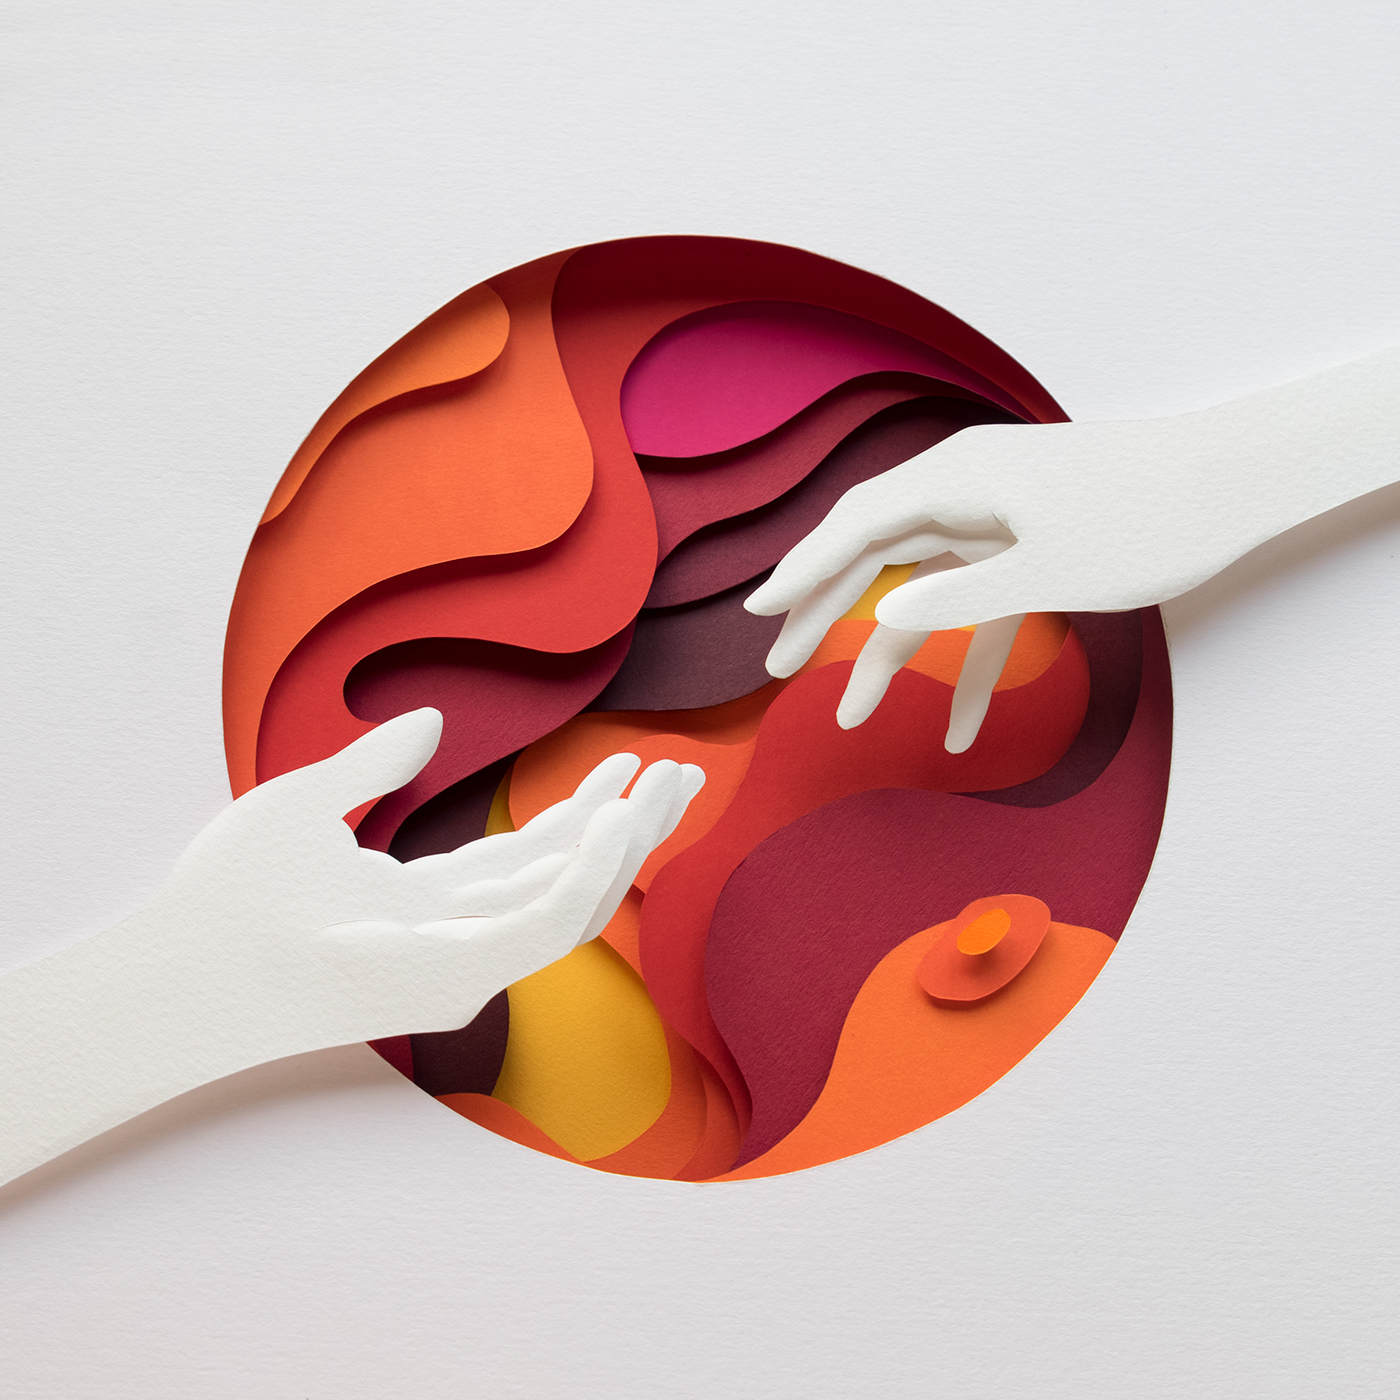 podcast cover design kind world hands 3D paper art paper cut paper dimensional paper sculpture